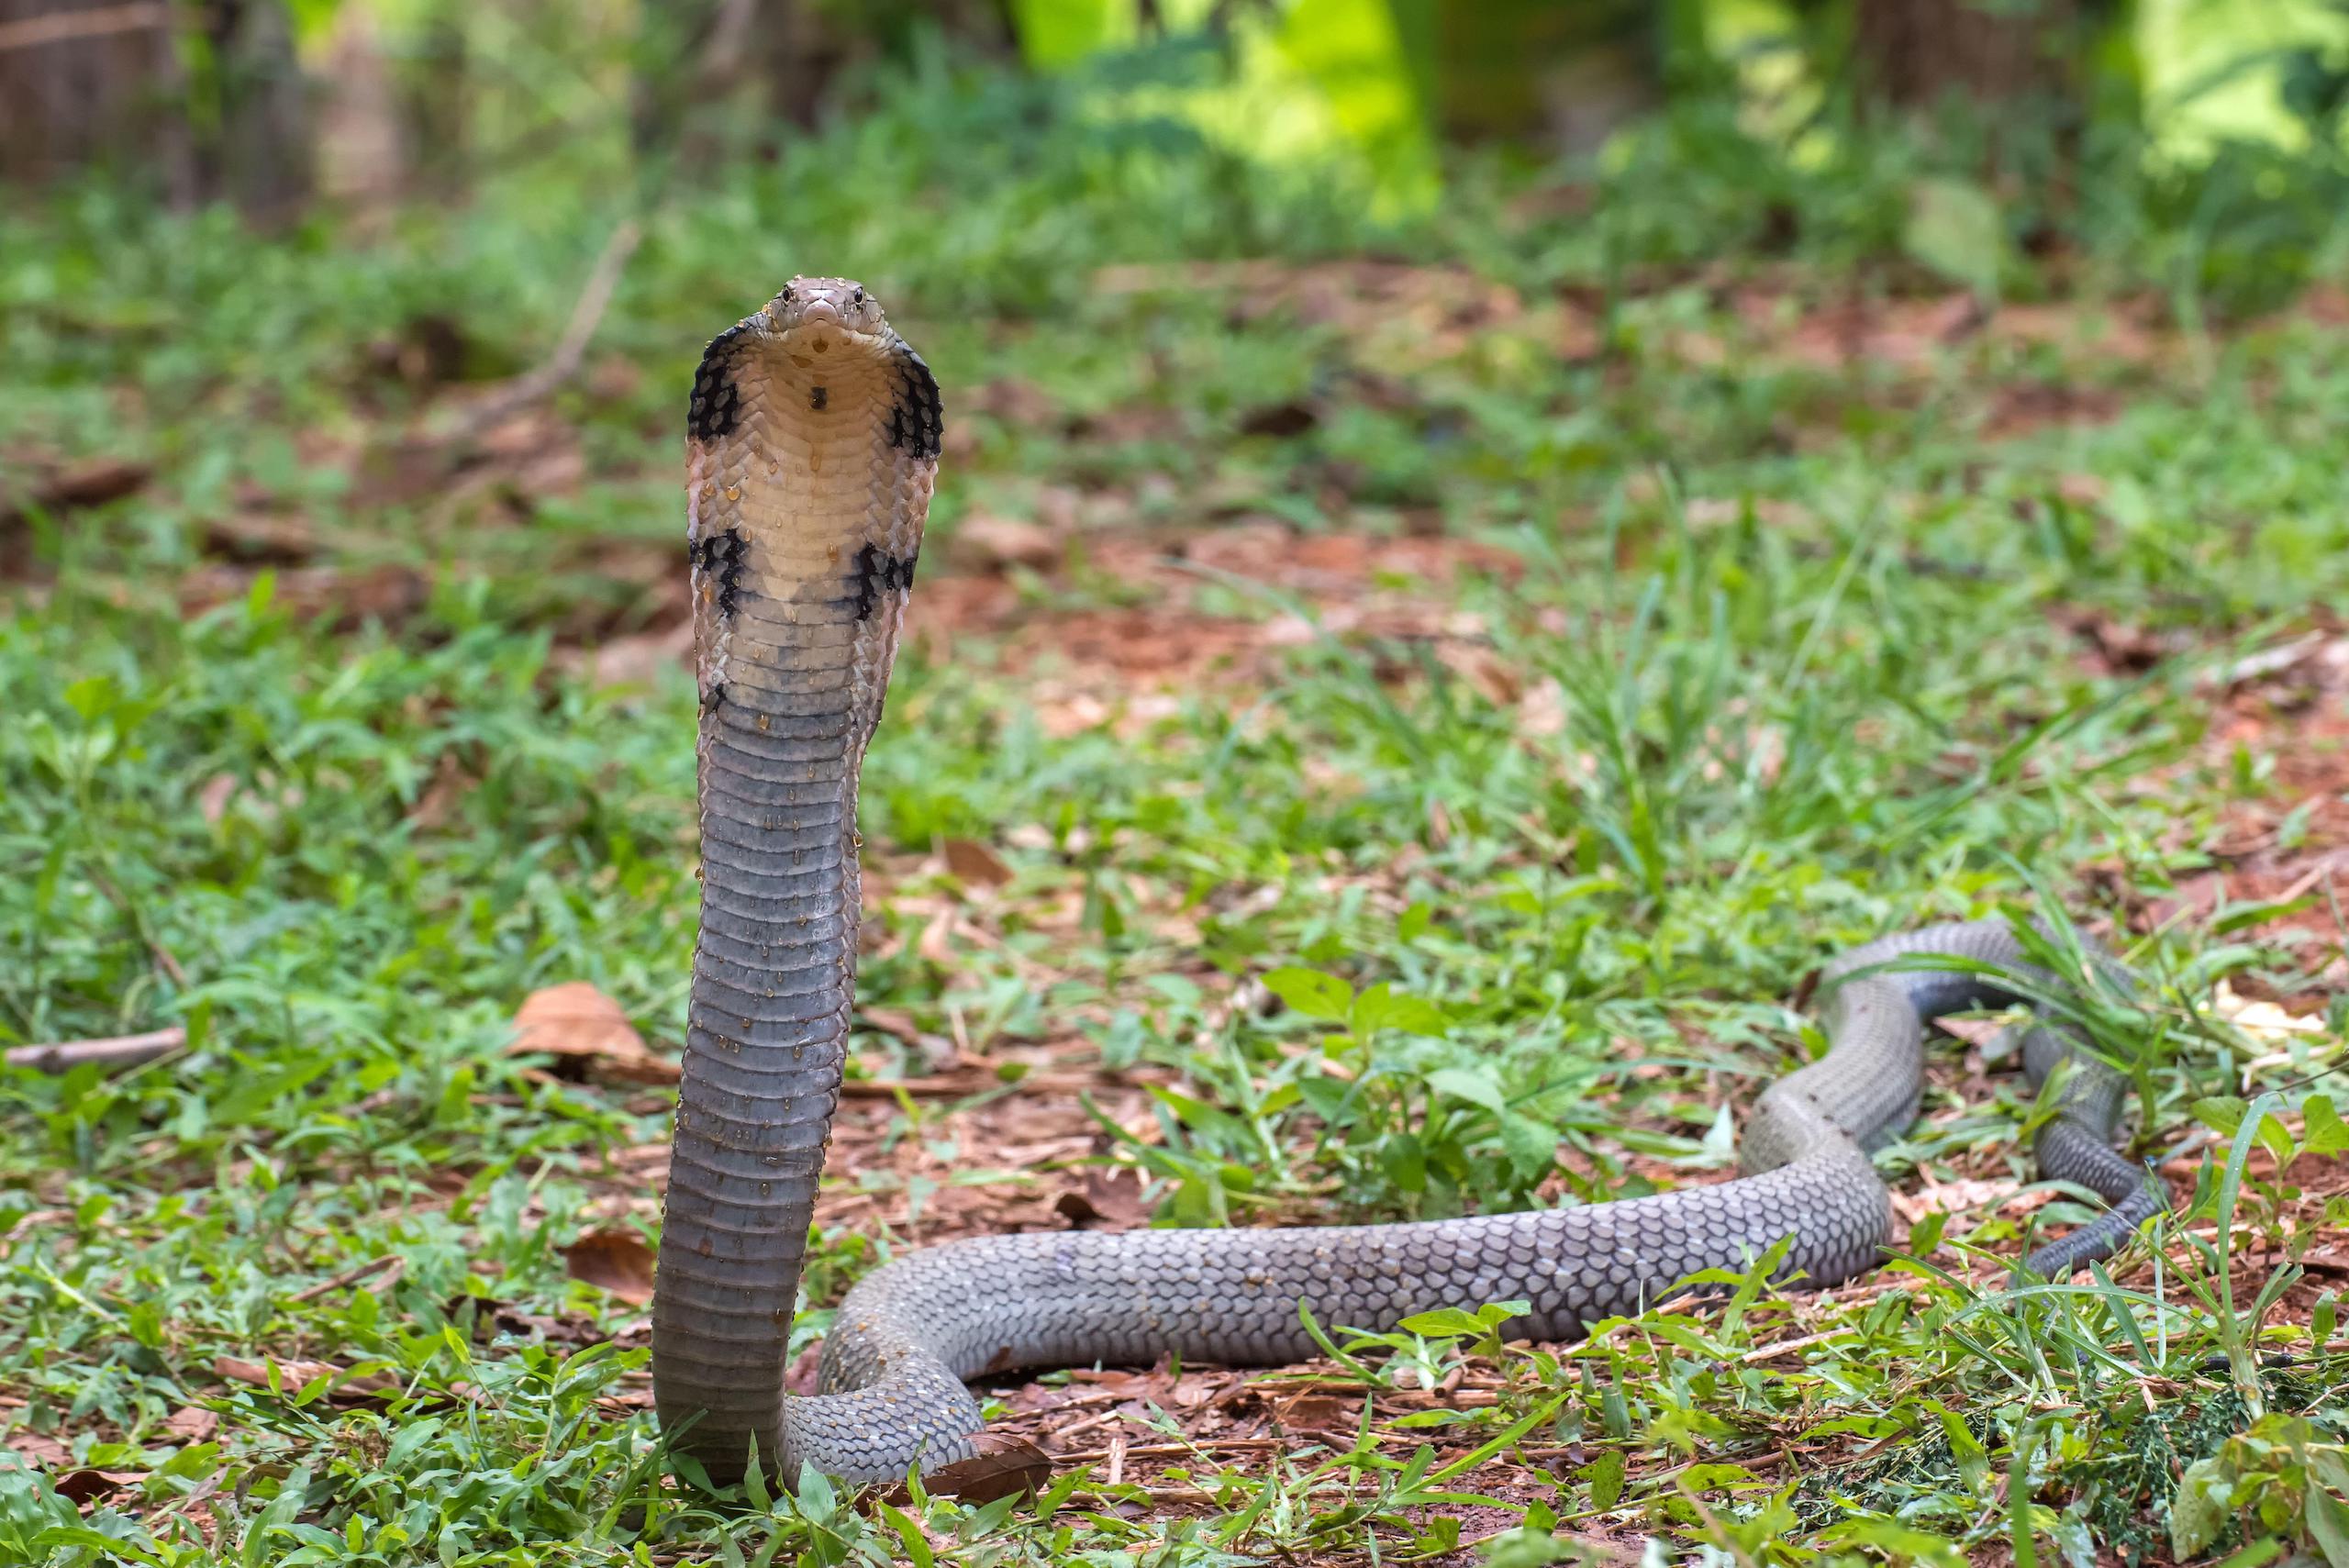 A king cobra in grass, Indonesia